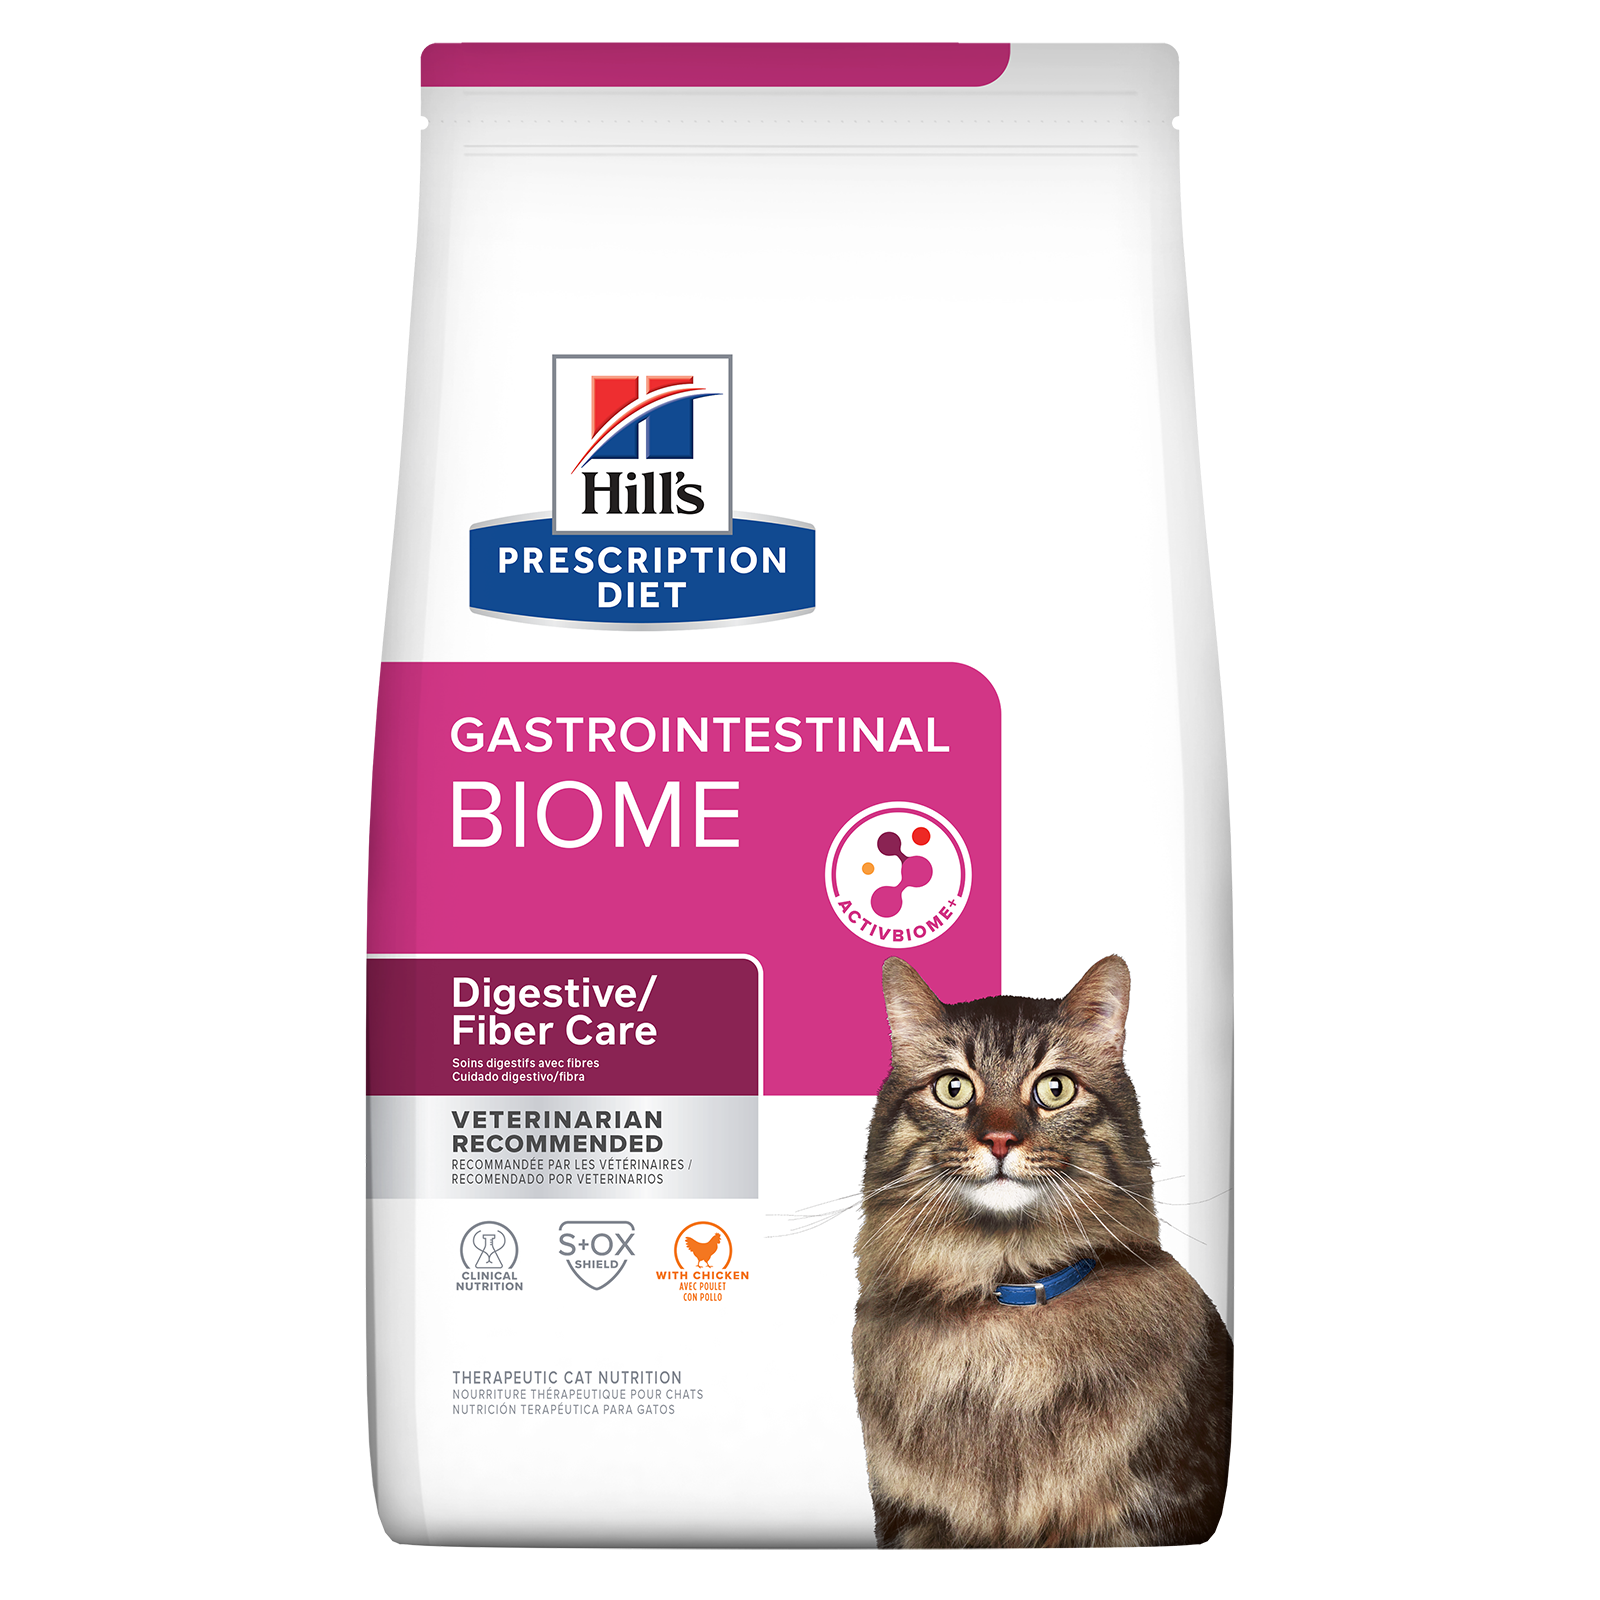 Hill's Prescription Diet Cat Food Gastrointestinal Biome Digestive/Fibre Care with Chicken